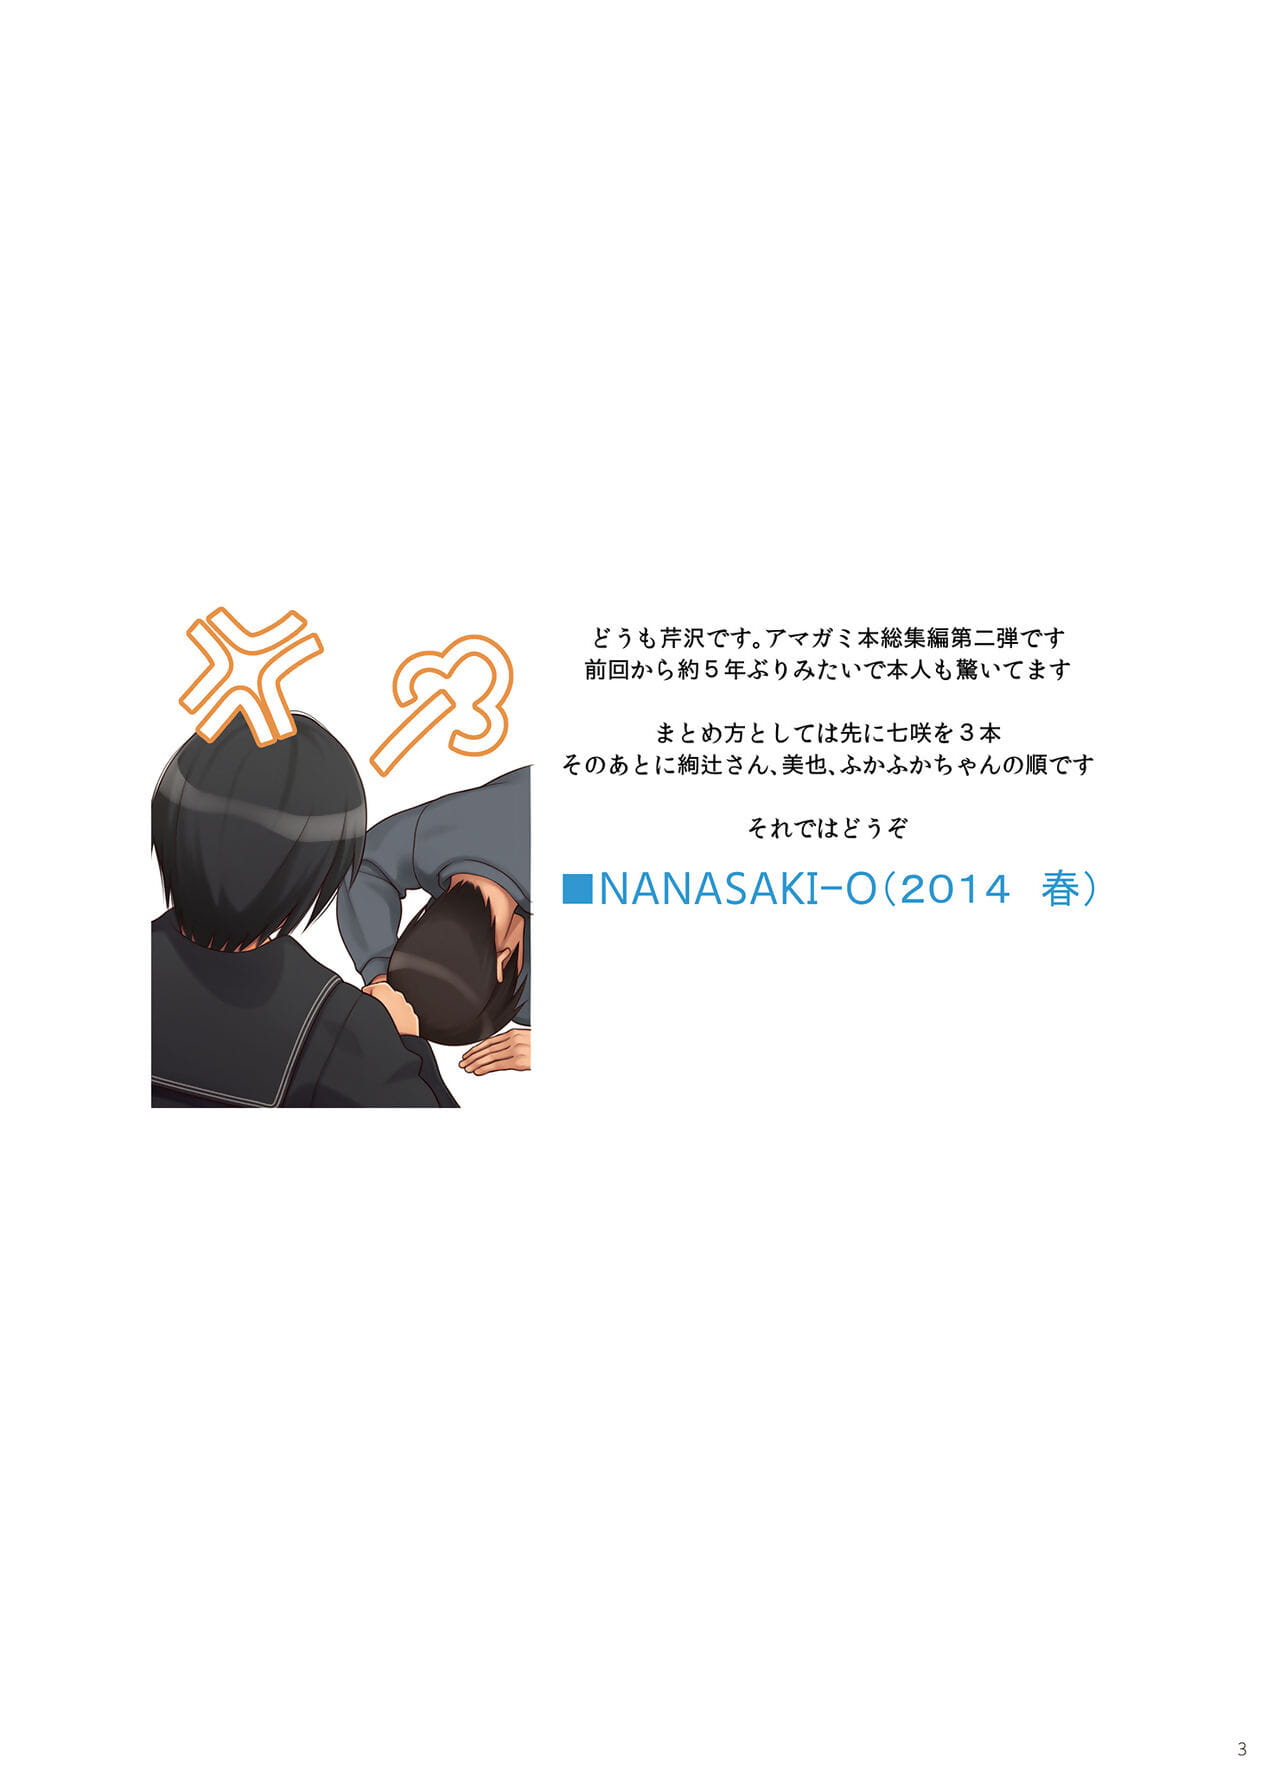 Serizawa kamer Serizawa een collection2 amagami digitaal